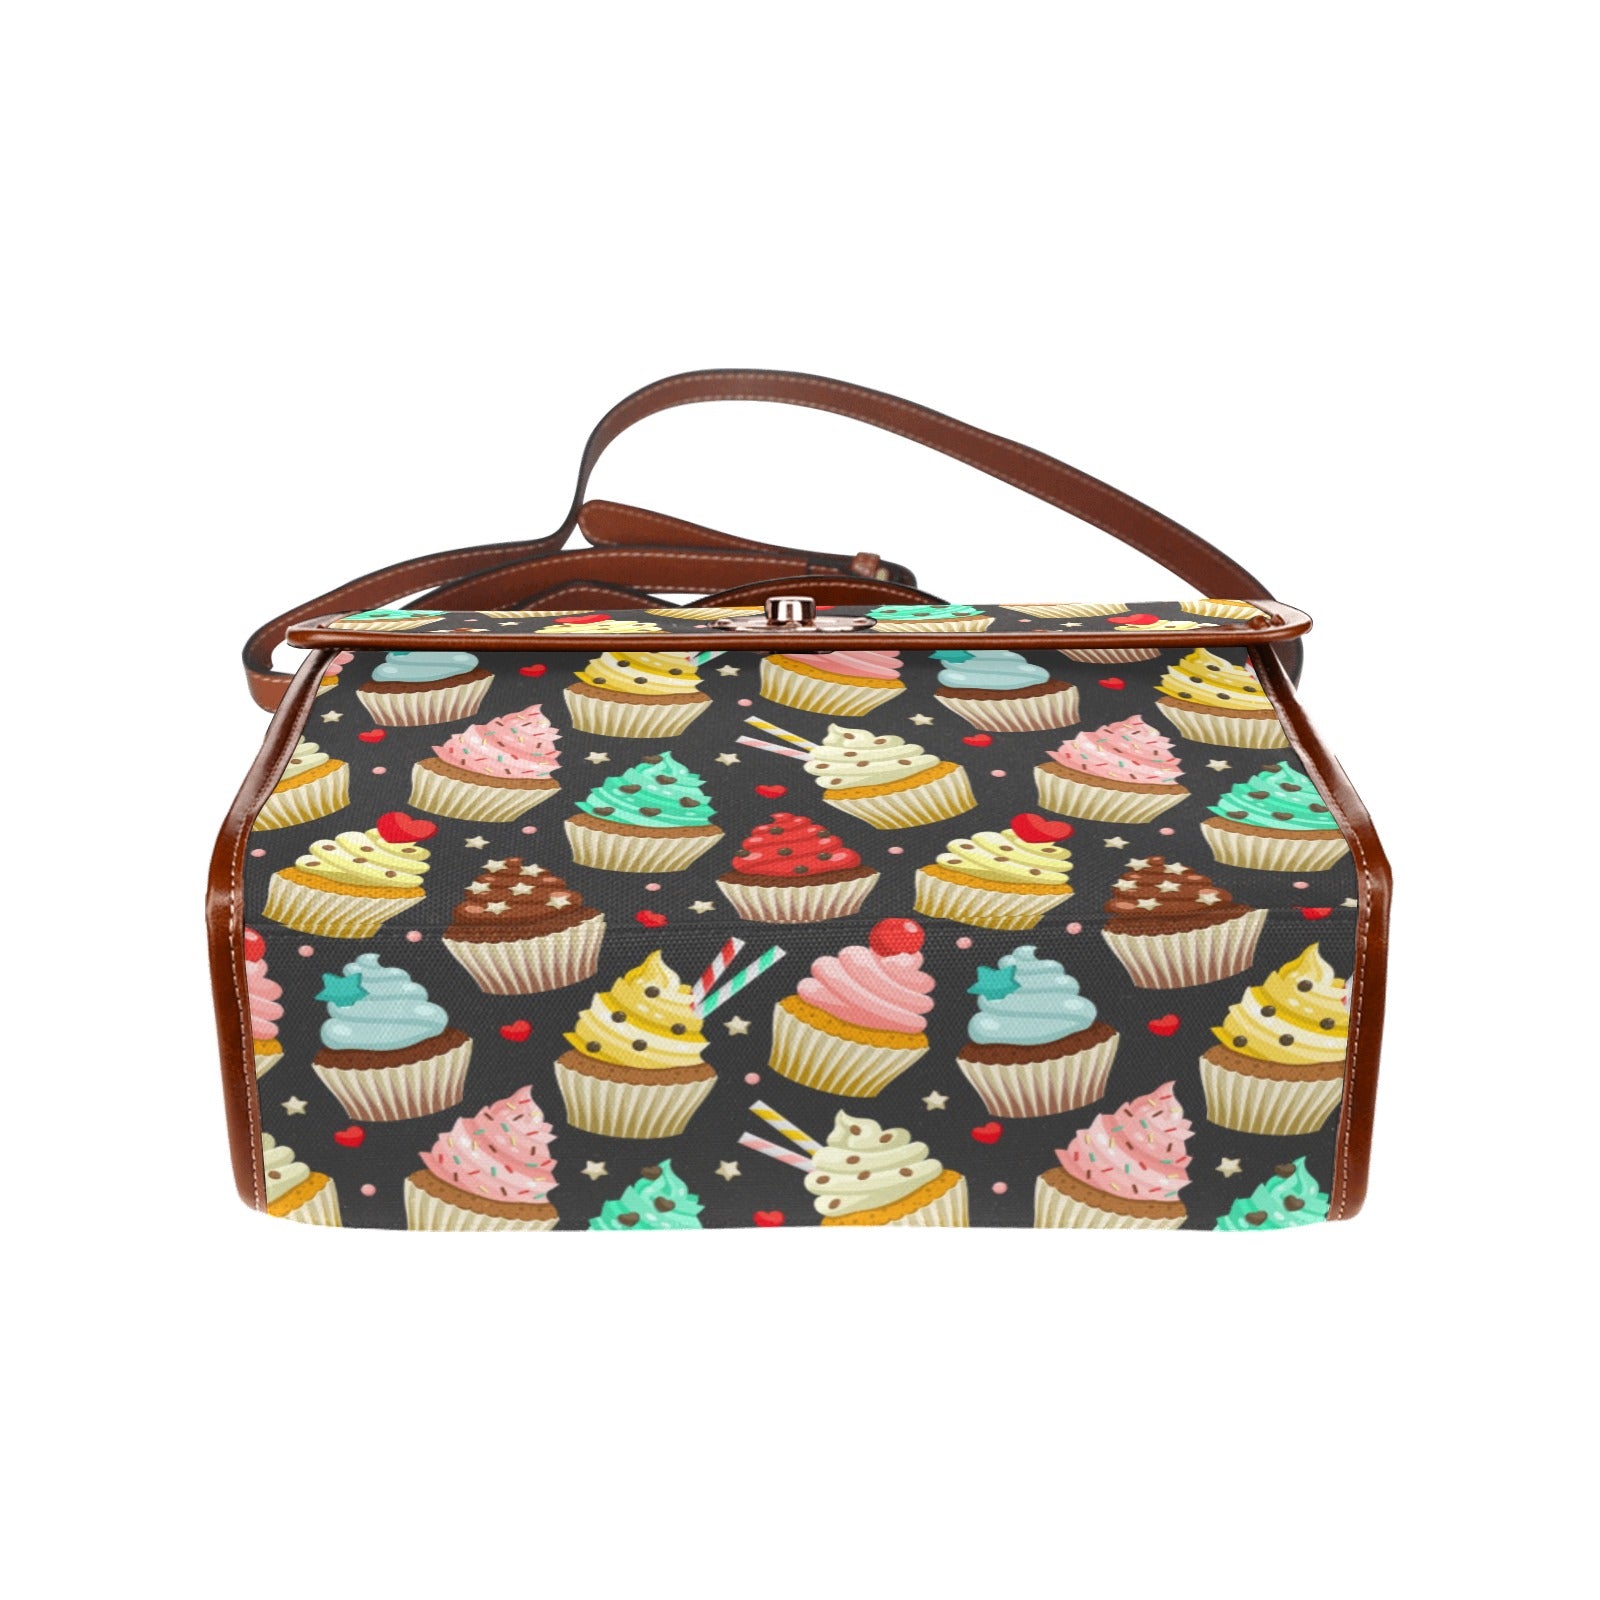 Cupcake - Waterproof Canvas Handbag